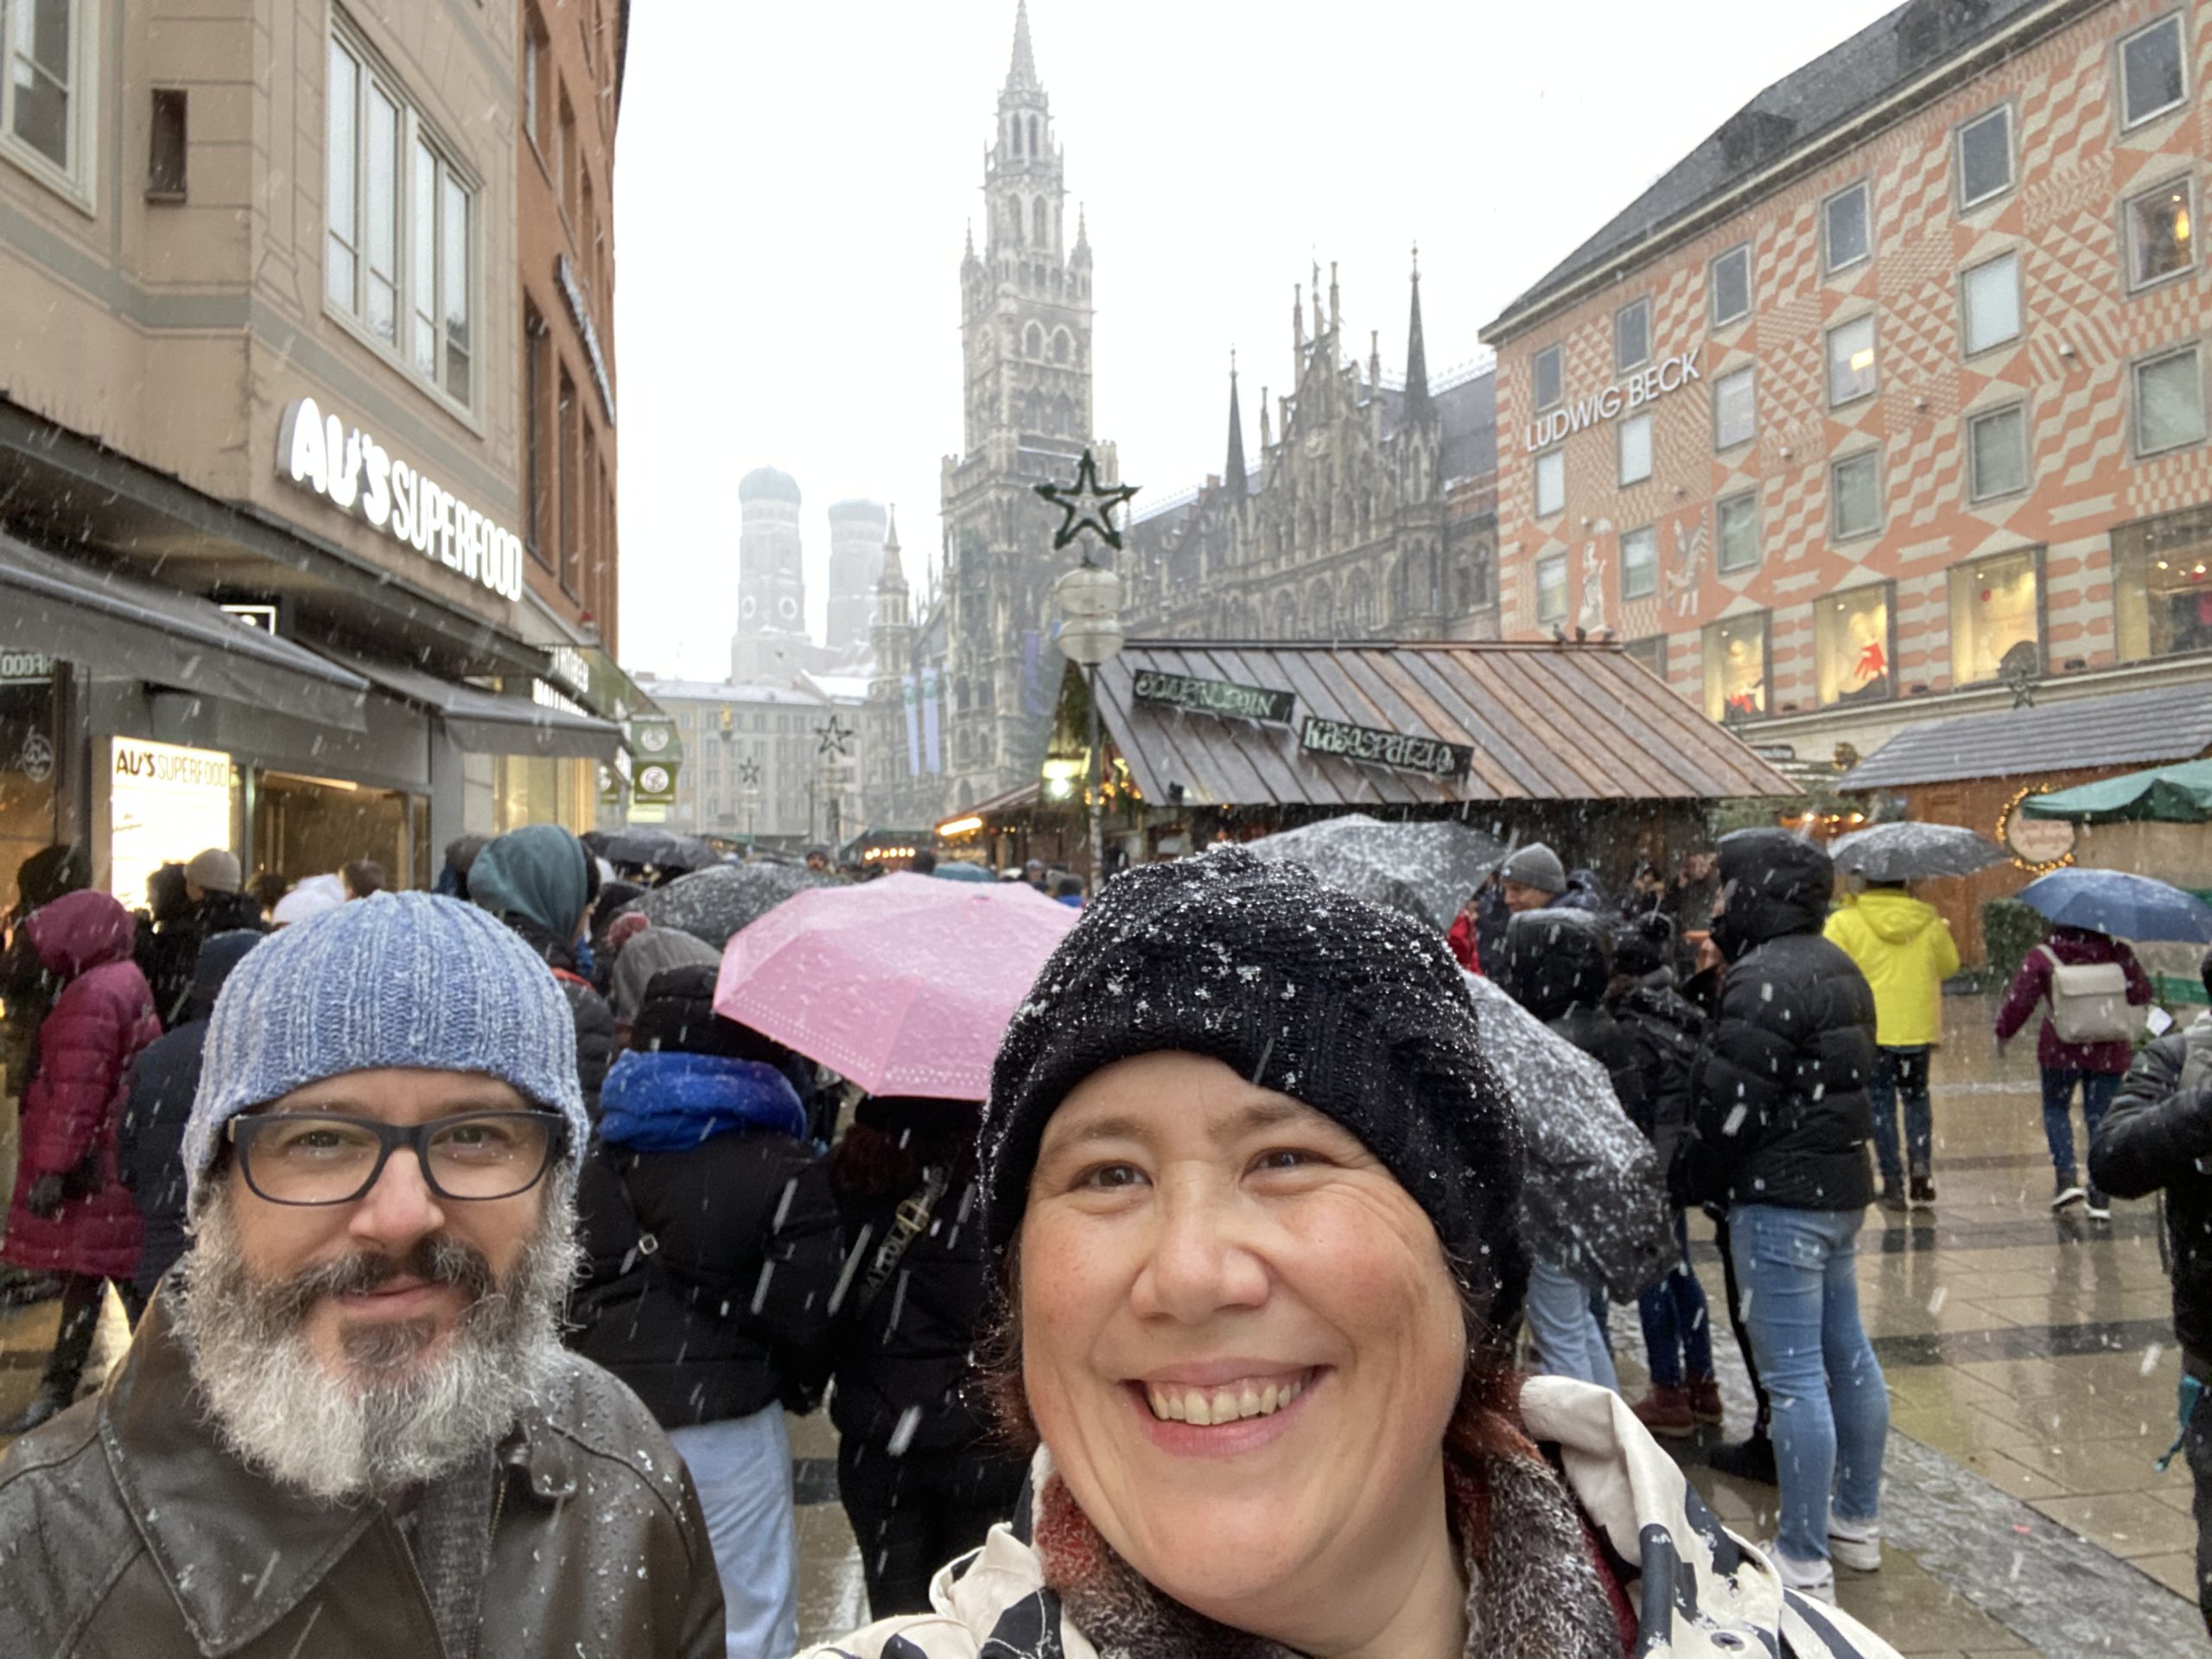 Snowing in Munich